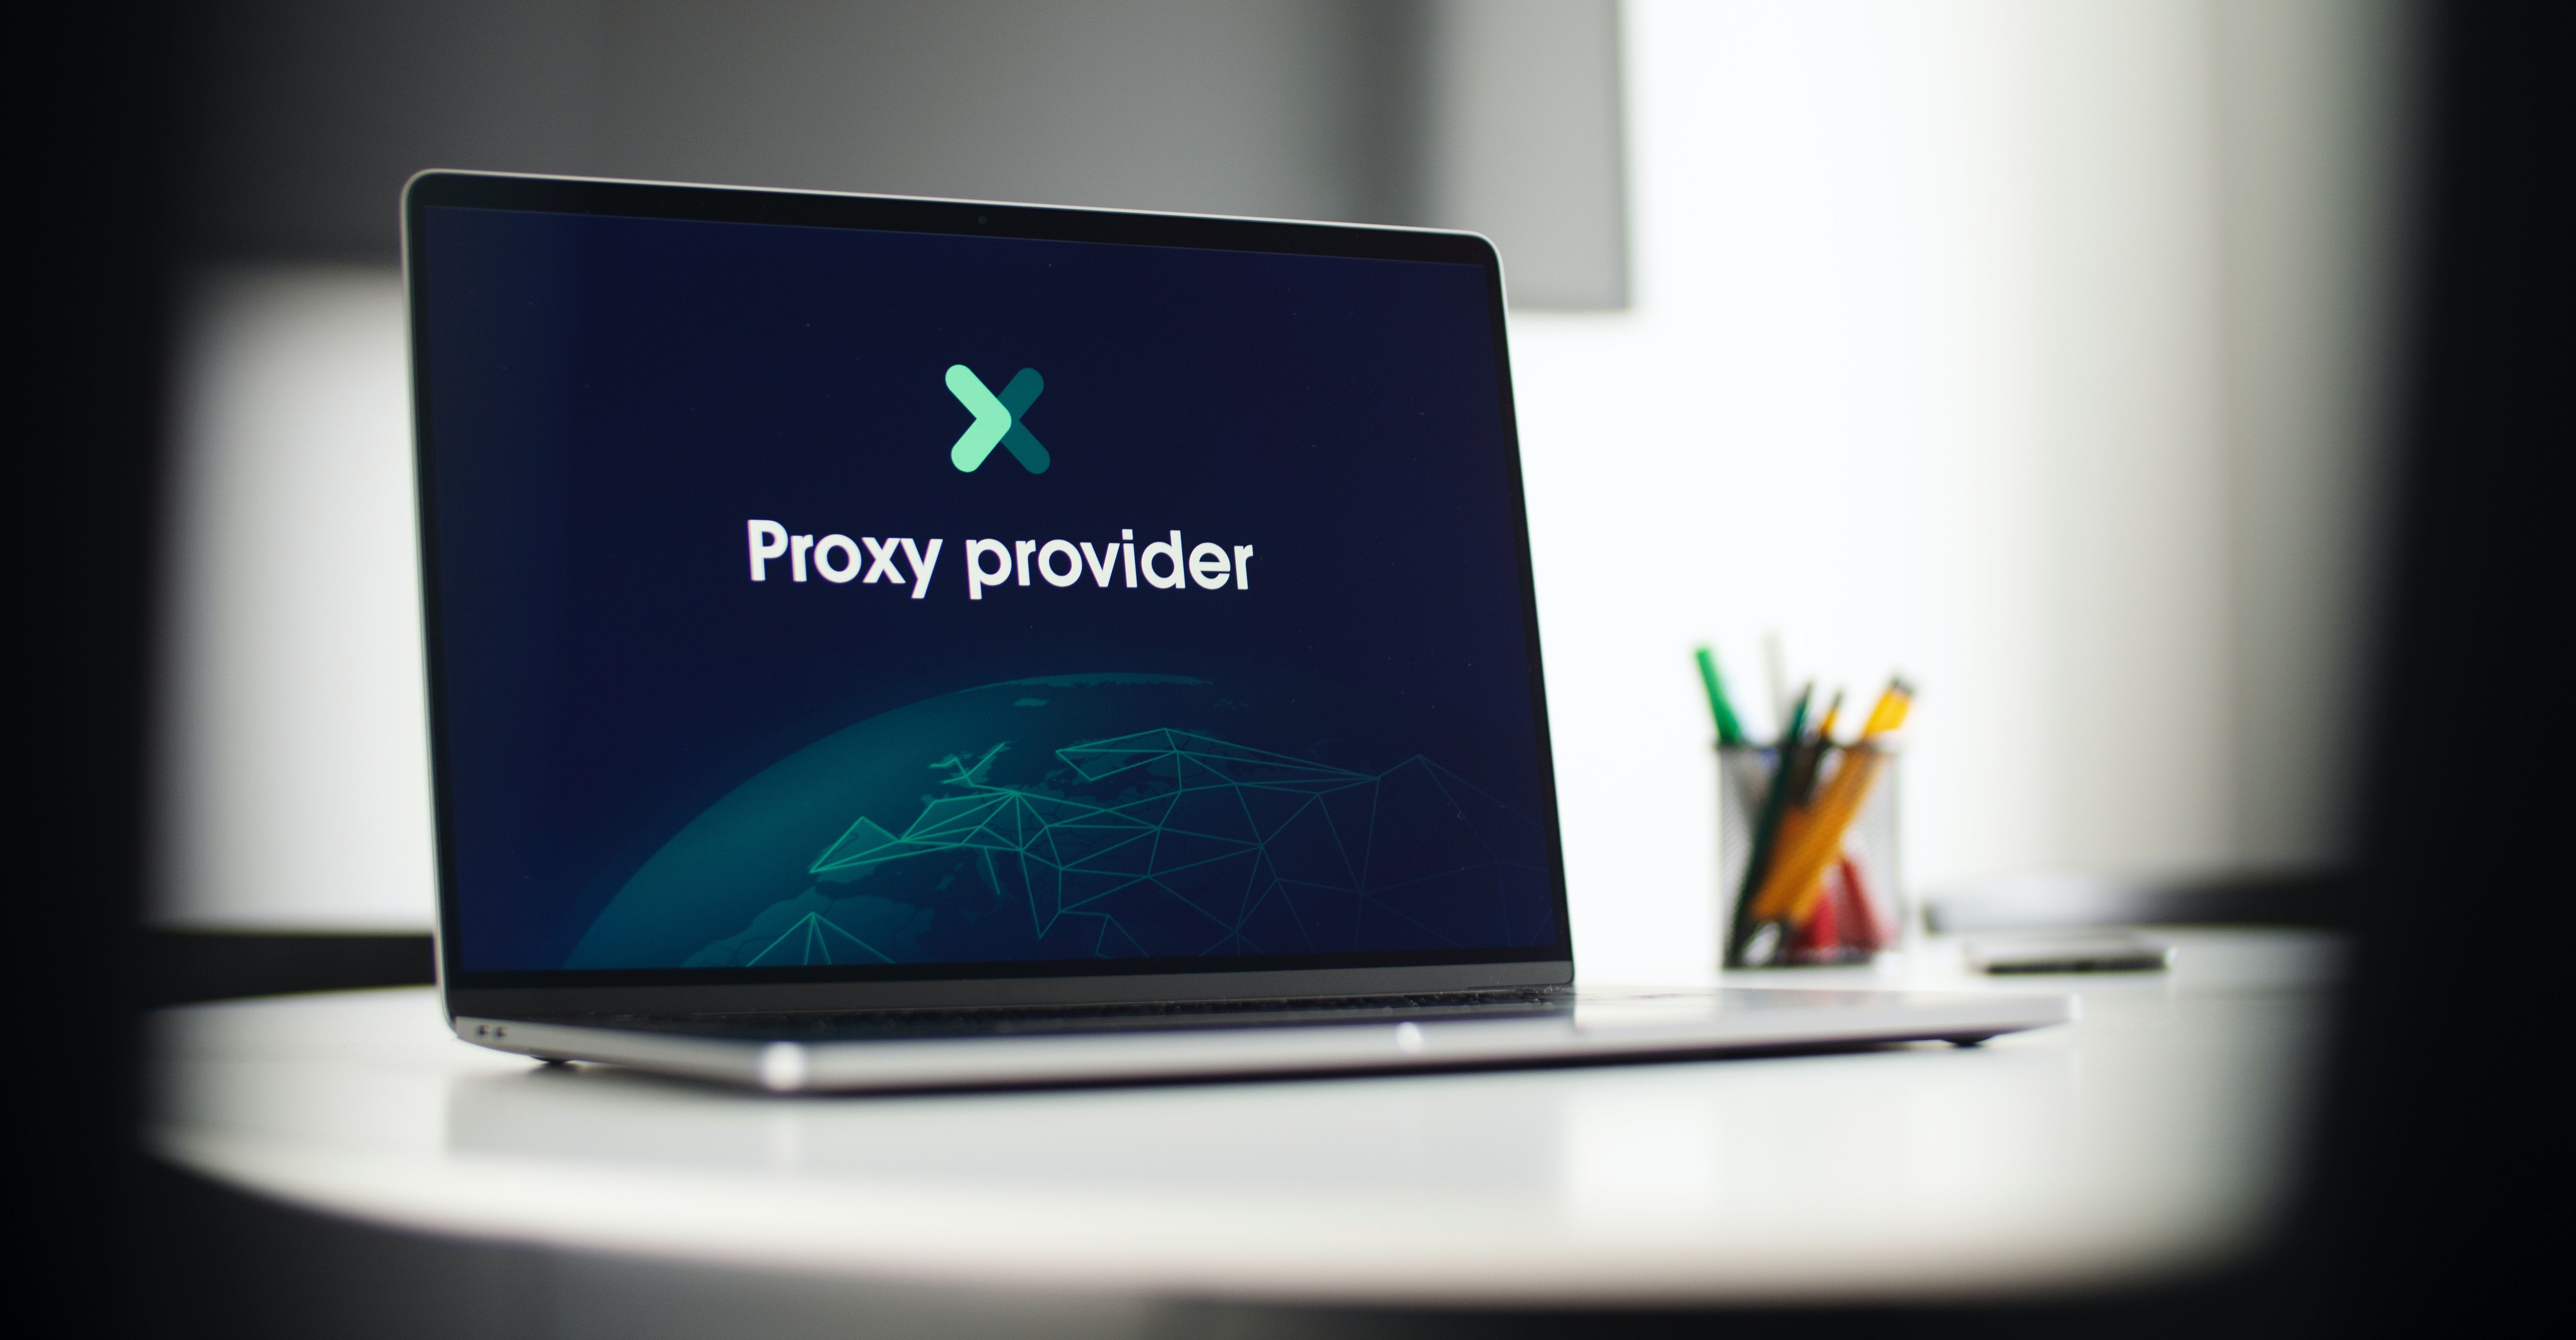 proxy service on laptop screen